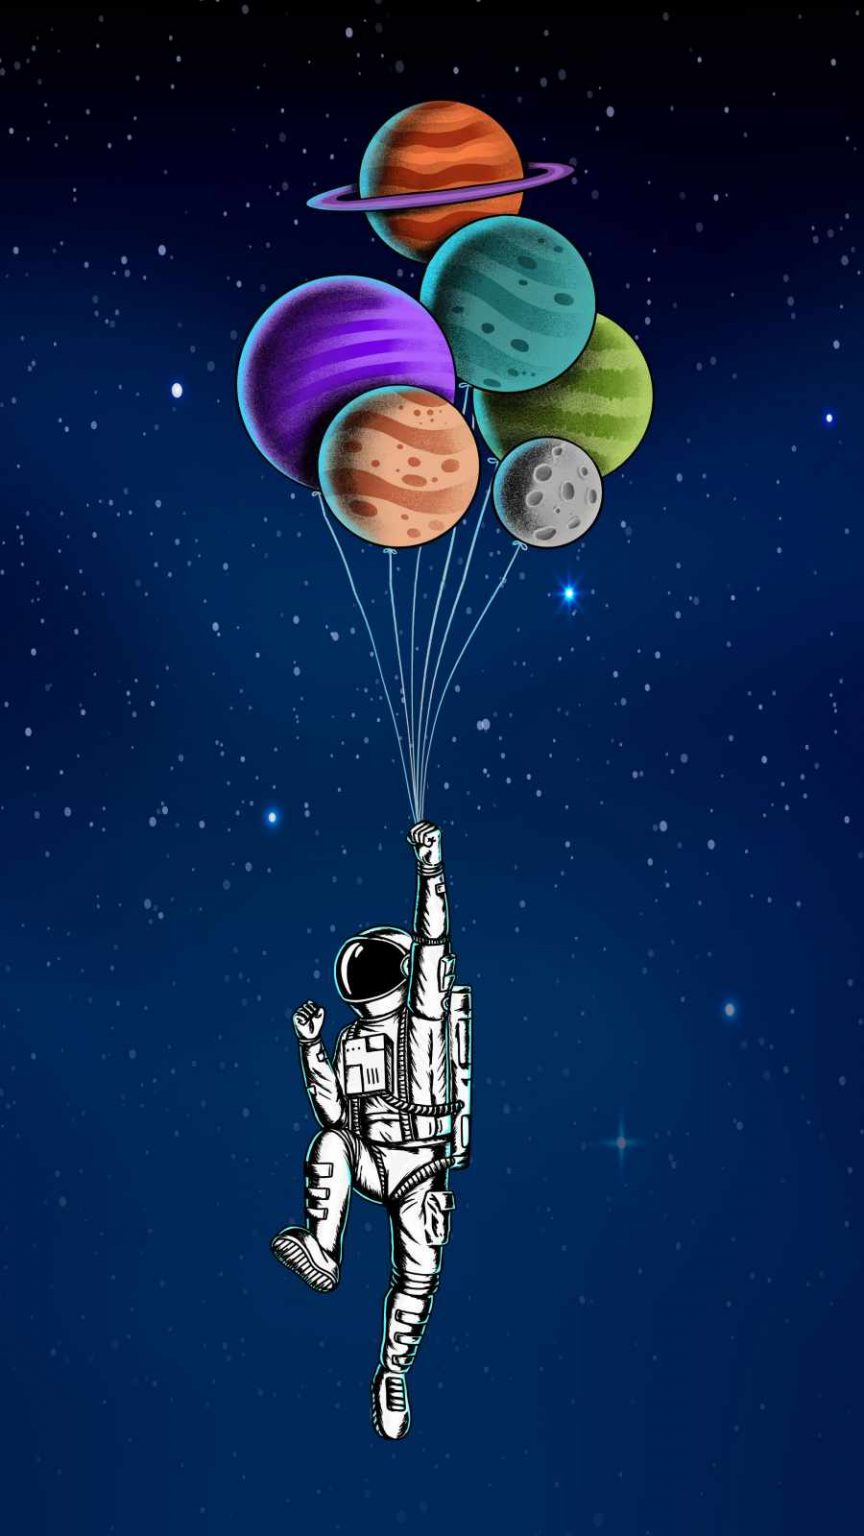 Astronaut Balloons iPhone Wallpaper - iPhone Wallpapers